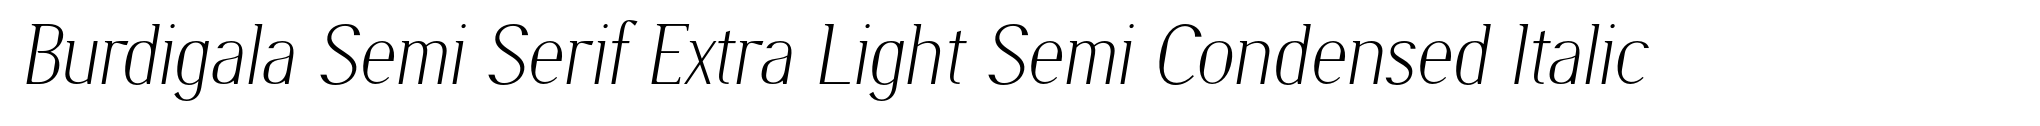 Burdigala Semi Serif Extra Light Semi Condensed Italic image